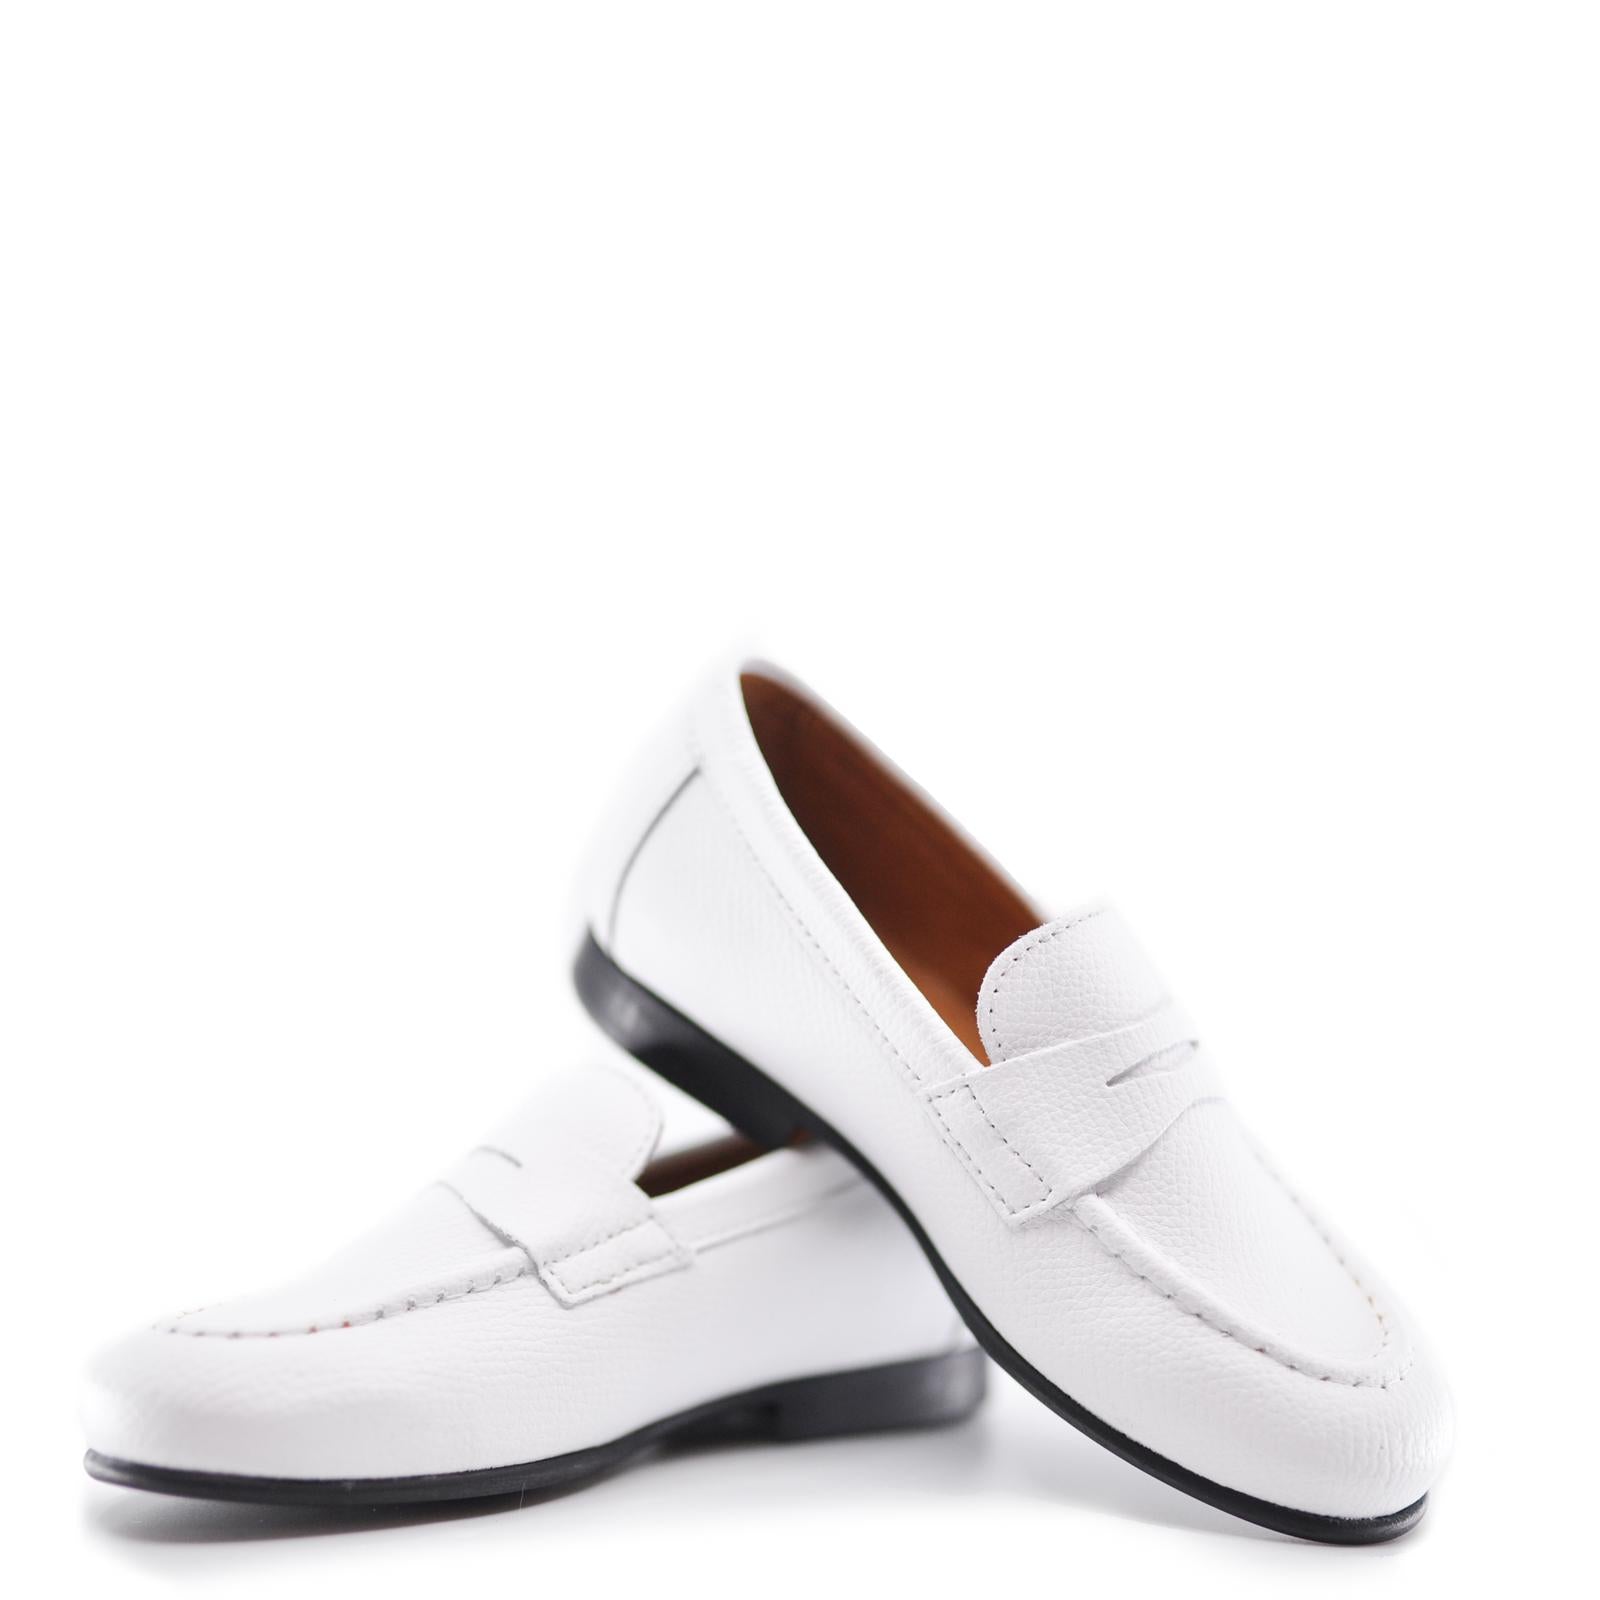 Atlanta Mocassin White Leather Penny Dress Shoe-Tassel Children Shoes